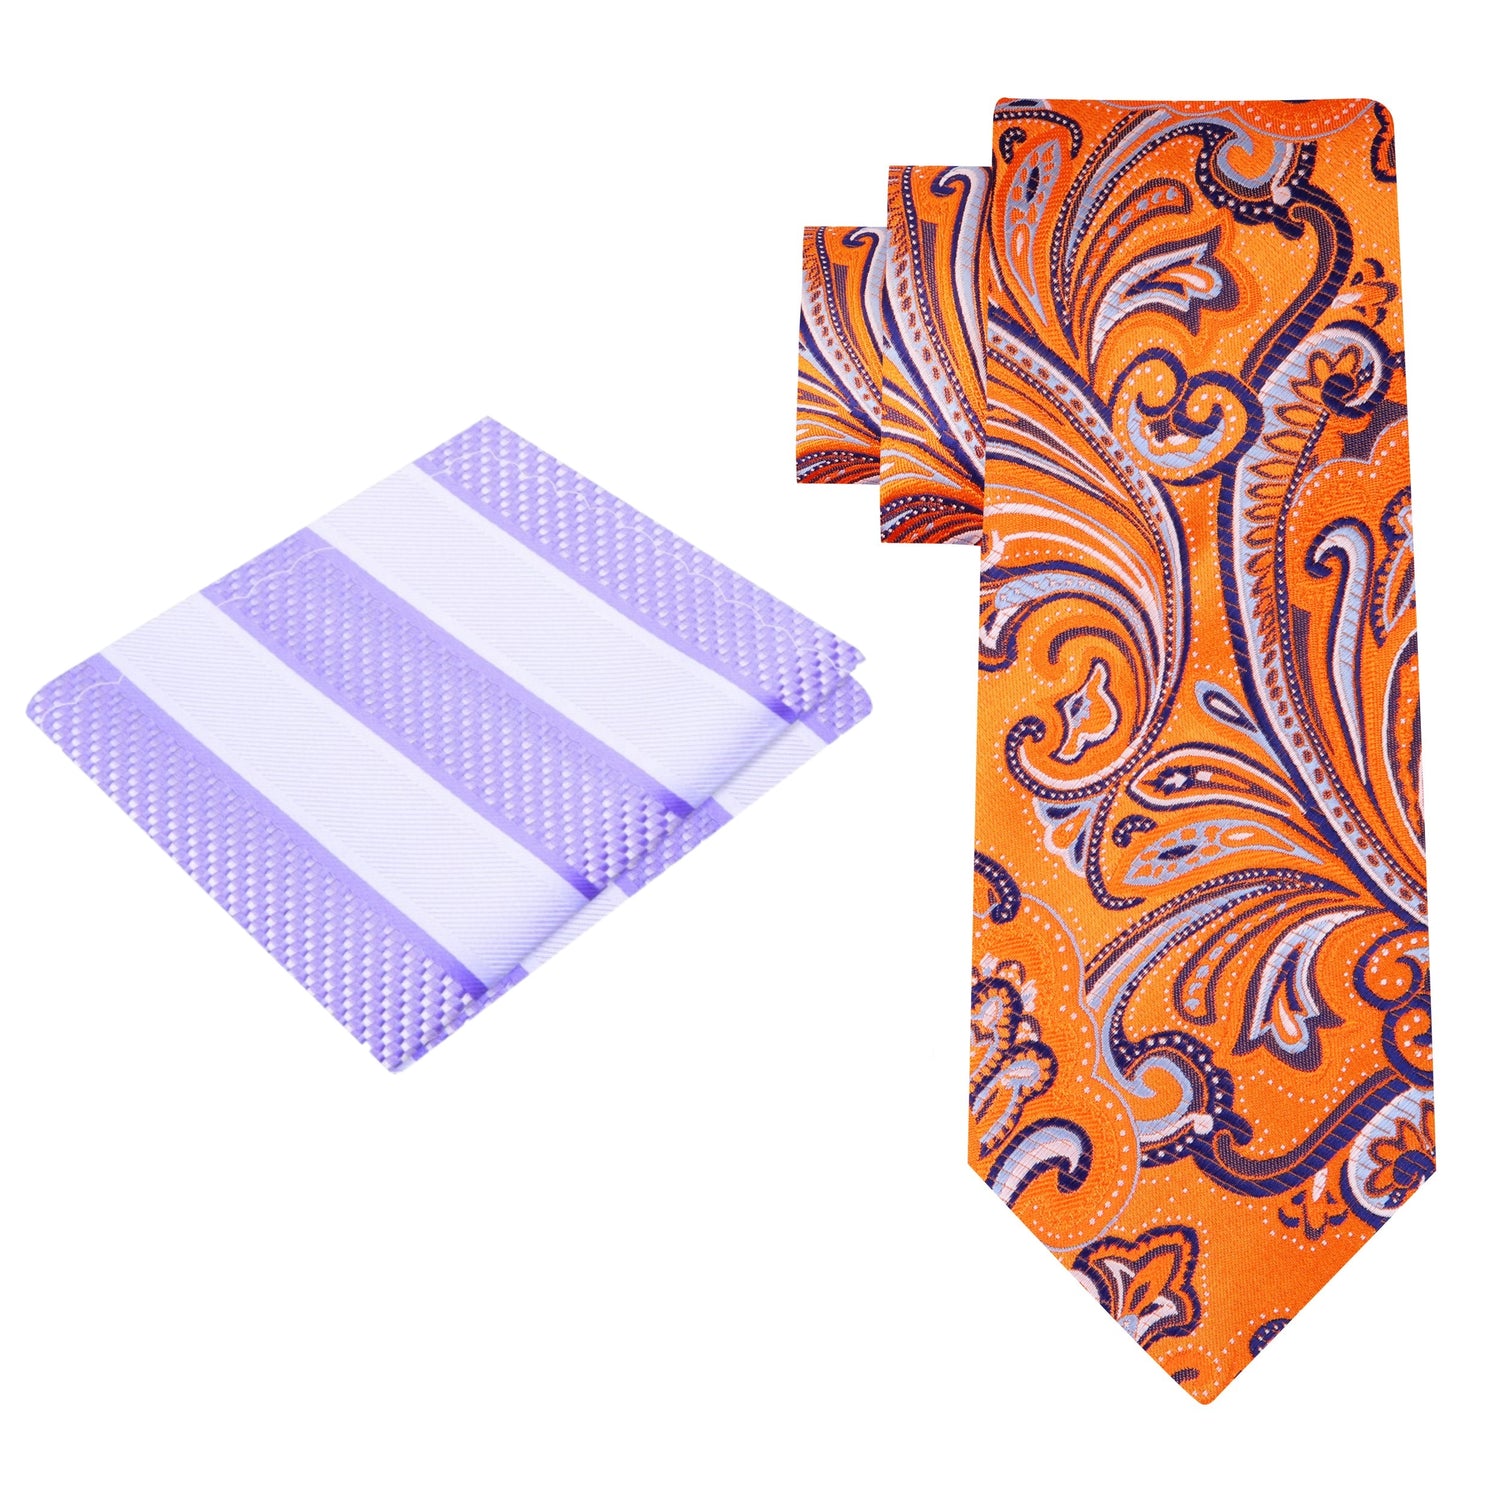 Alt View: Orange, Purple, White Paisley Necktie and Light Purple Stripe Pocket Square